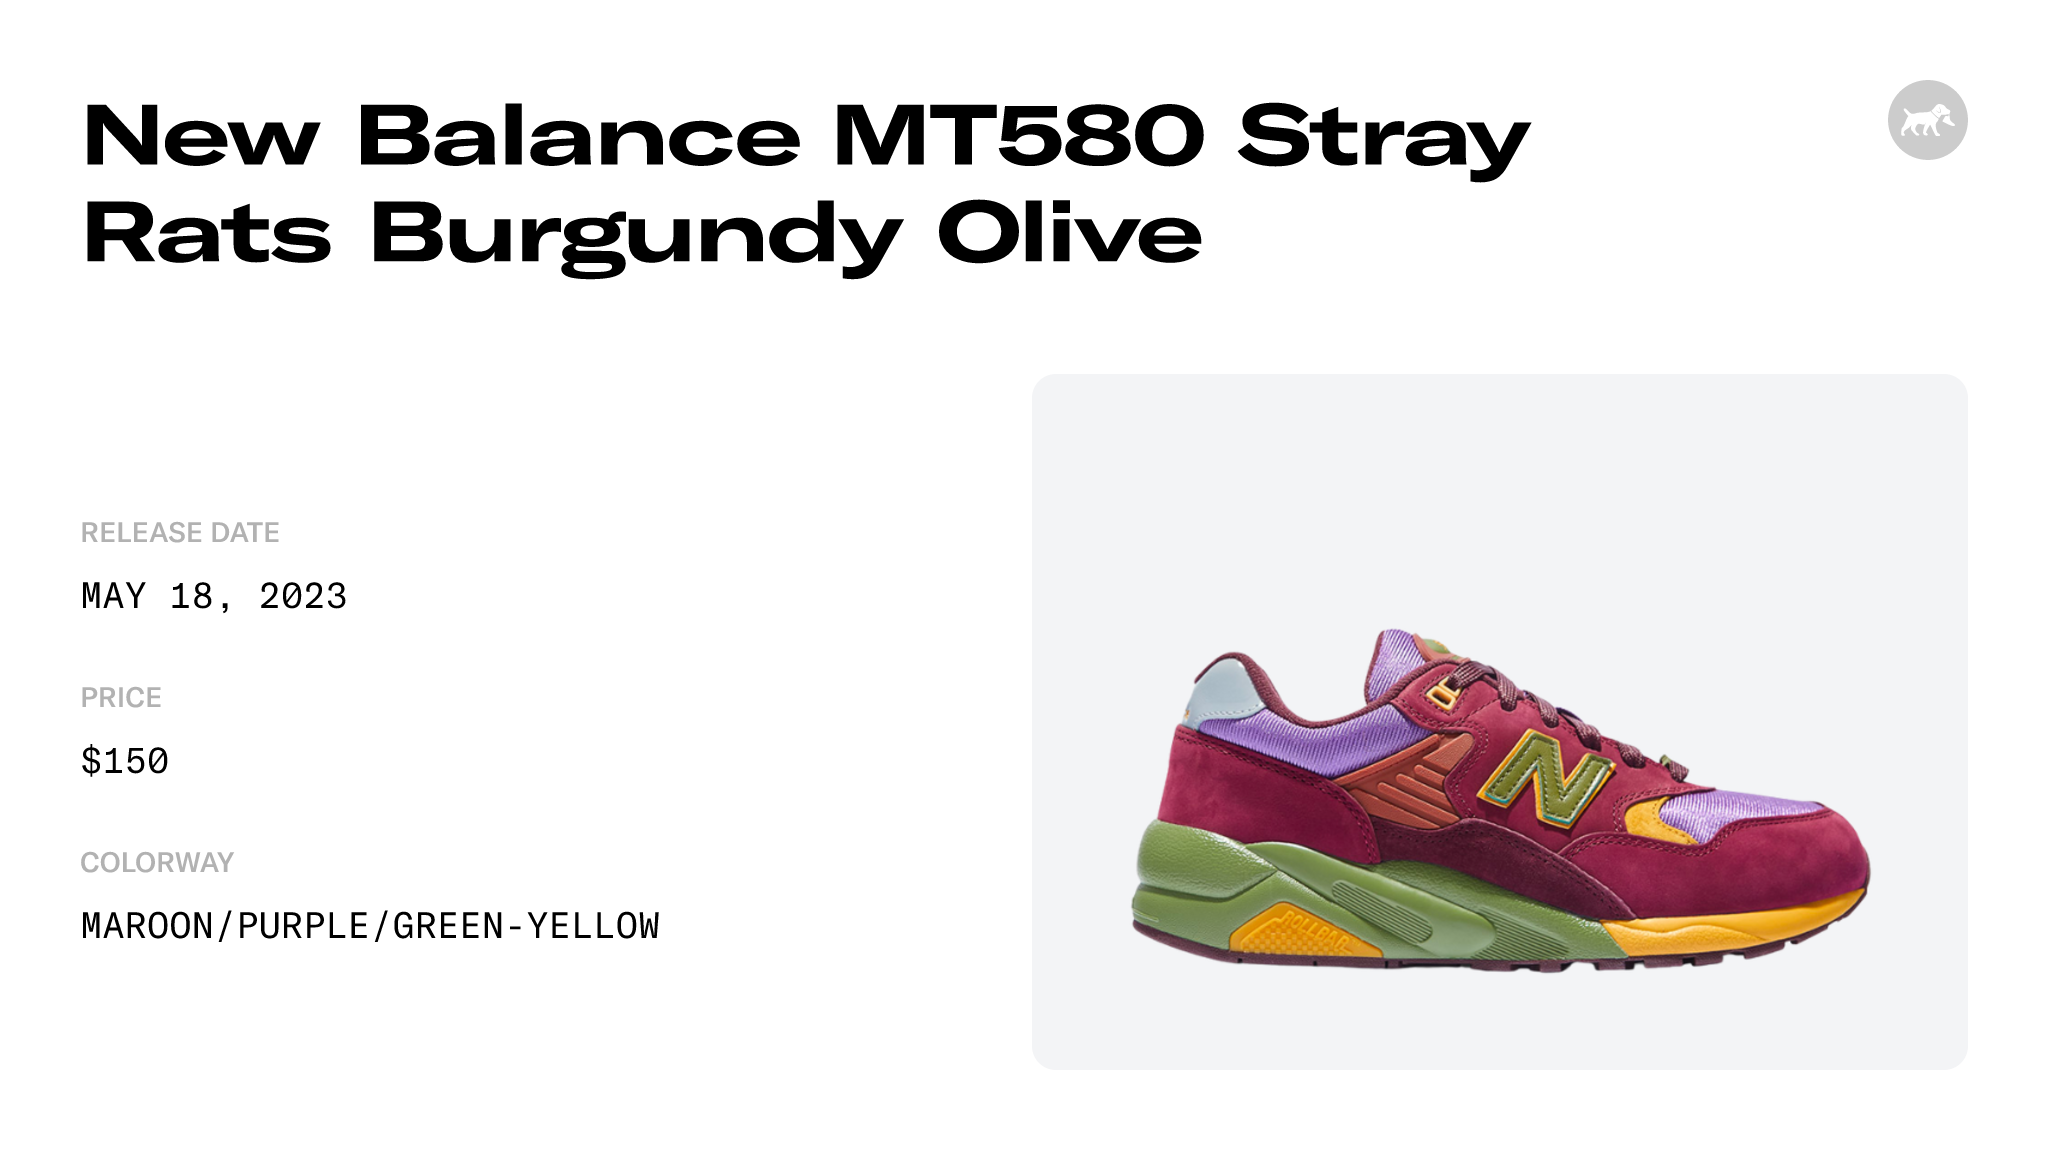 New Balance MT580 Stray Rats Burgundy Olive - MT580SR2 Raffles and 